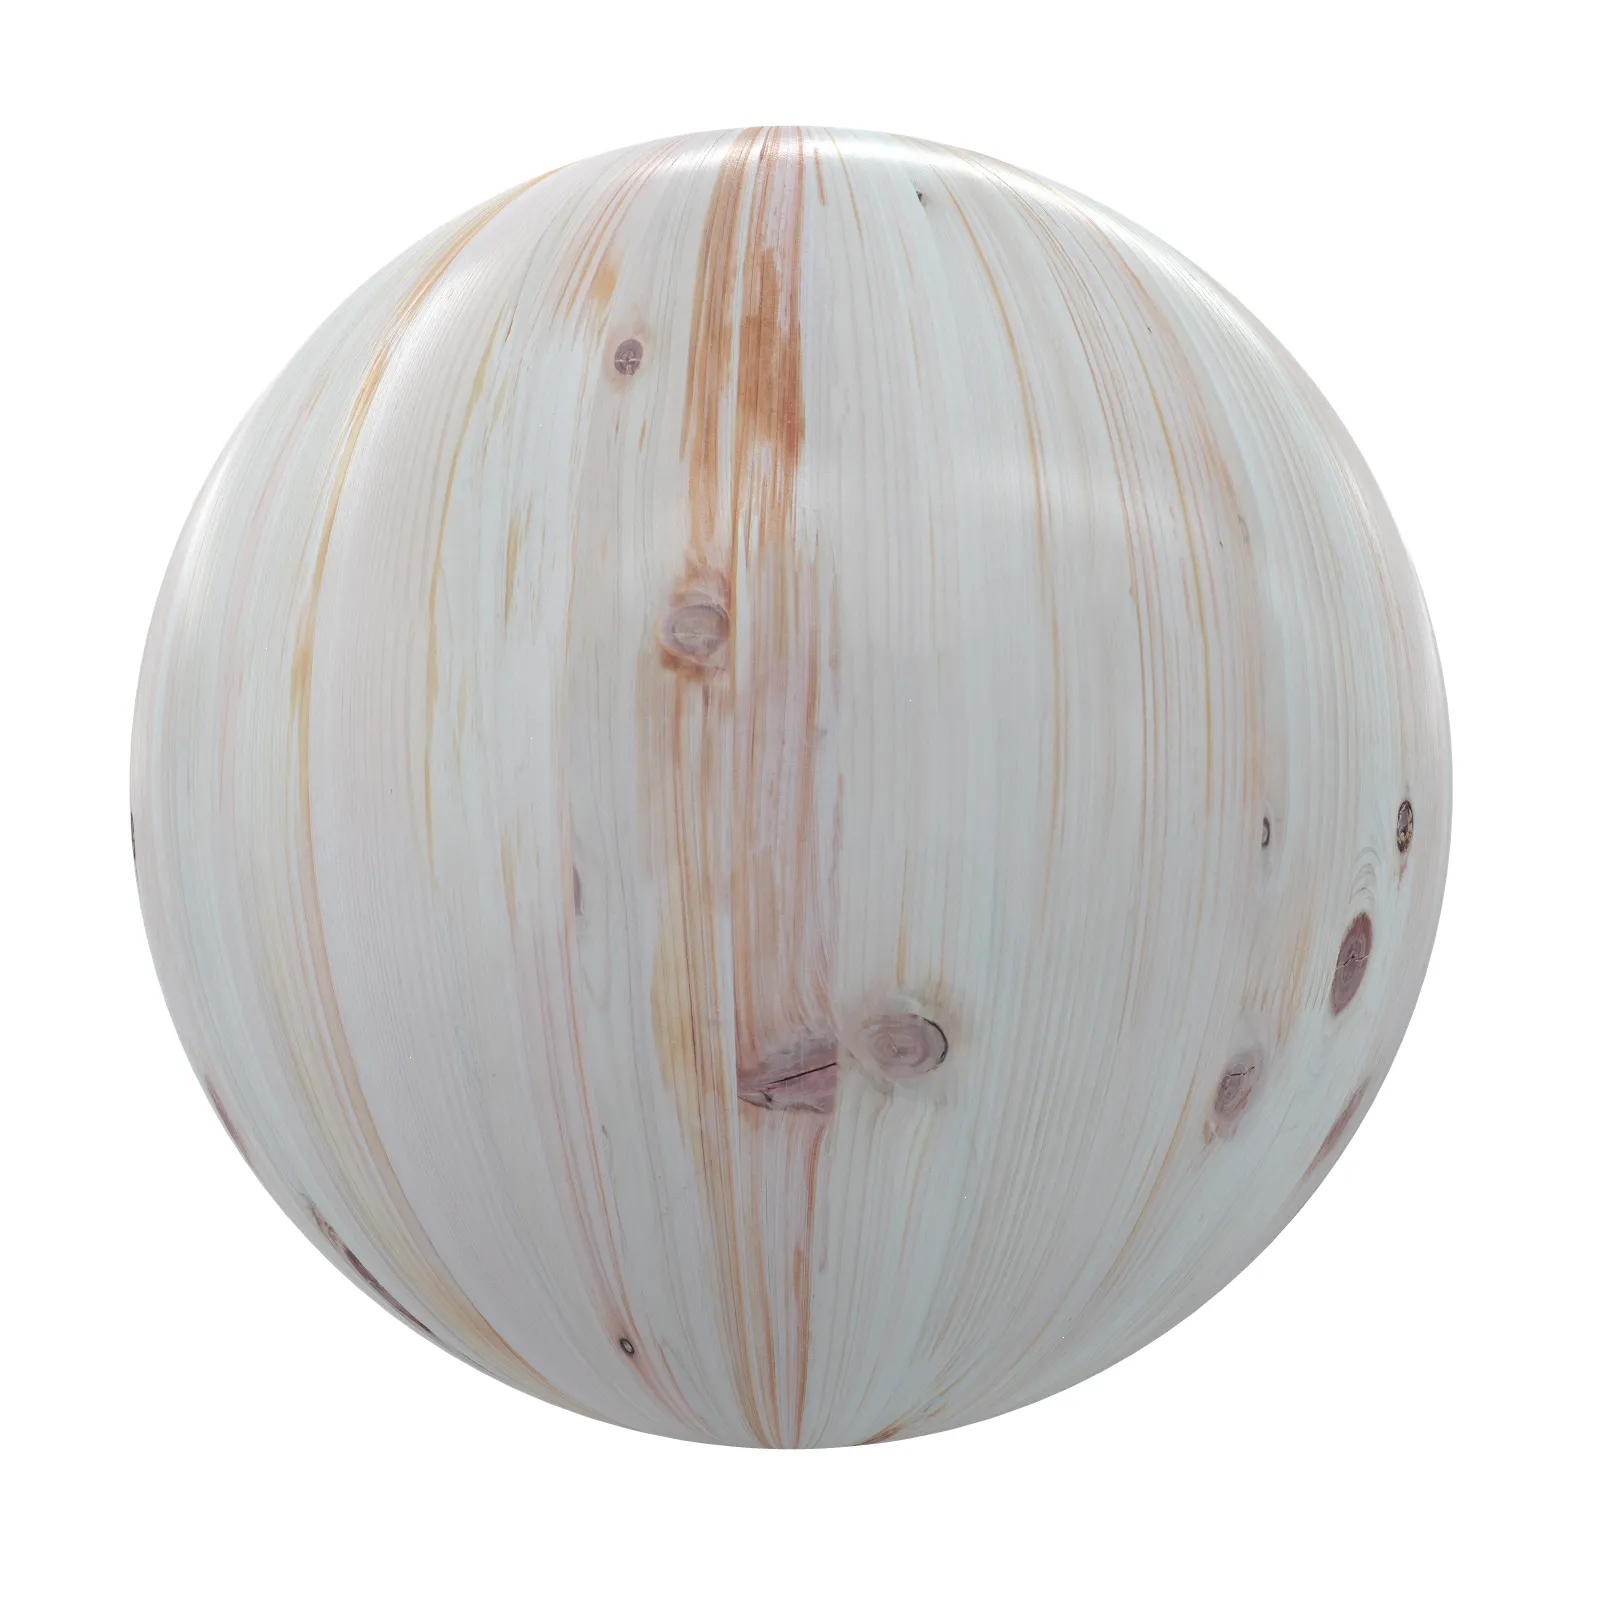 3ds Max Files – Texture – 8 – Wood Texture – 97 – Wood Texture by Minh Nguyen